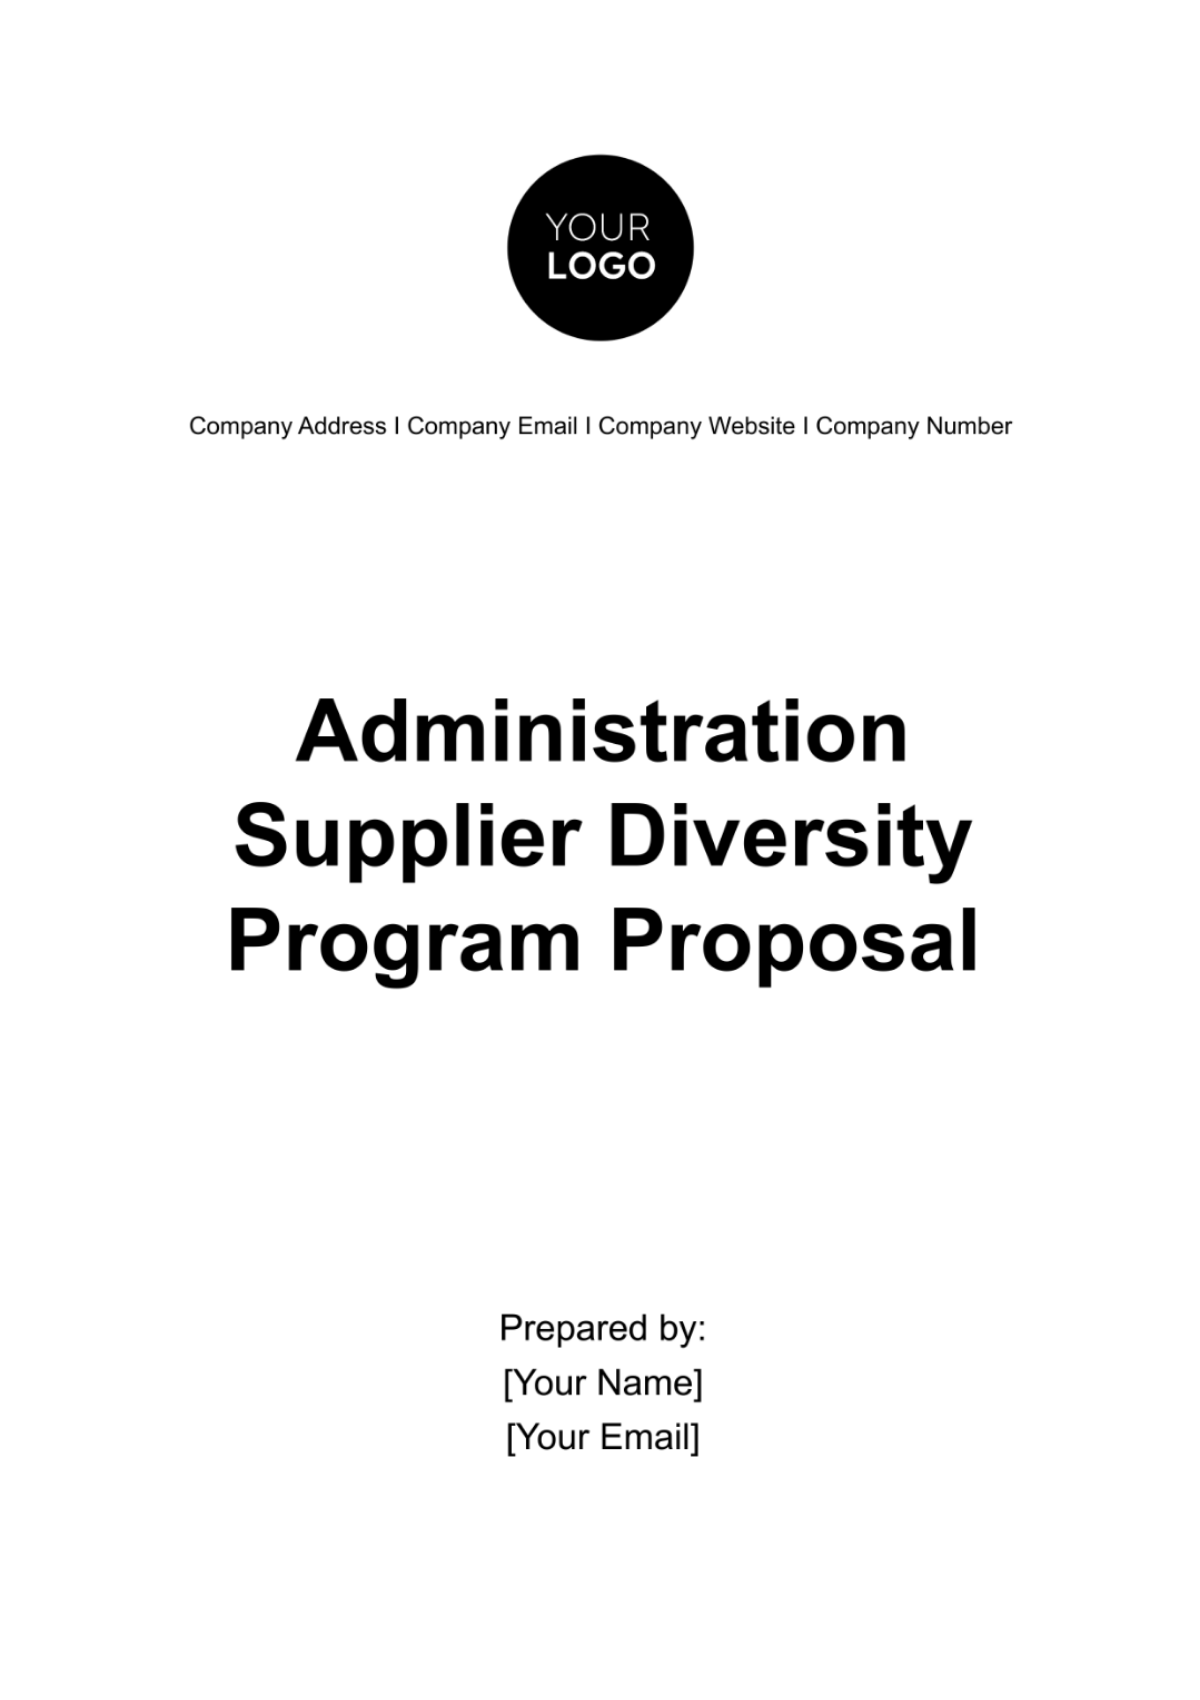 Administration Supplier Diversity Program Proposal Template